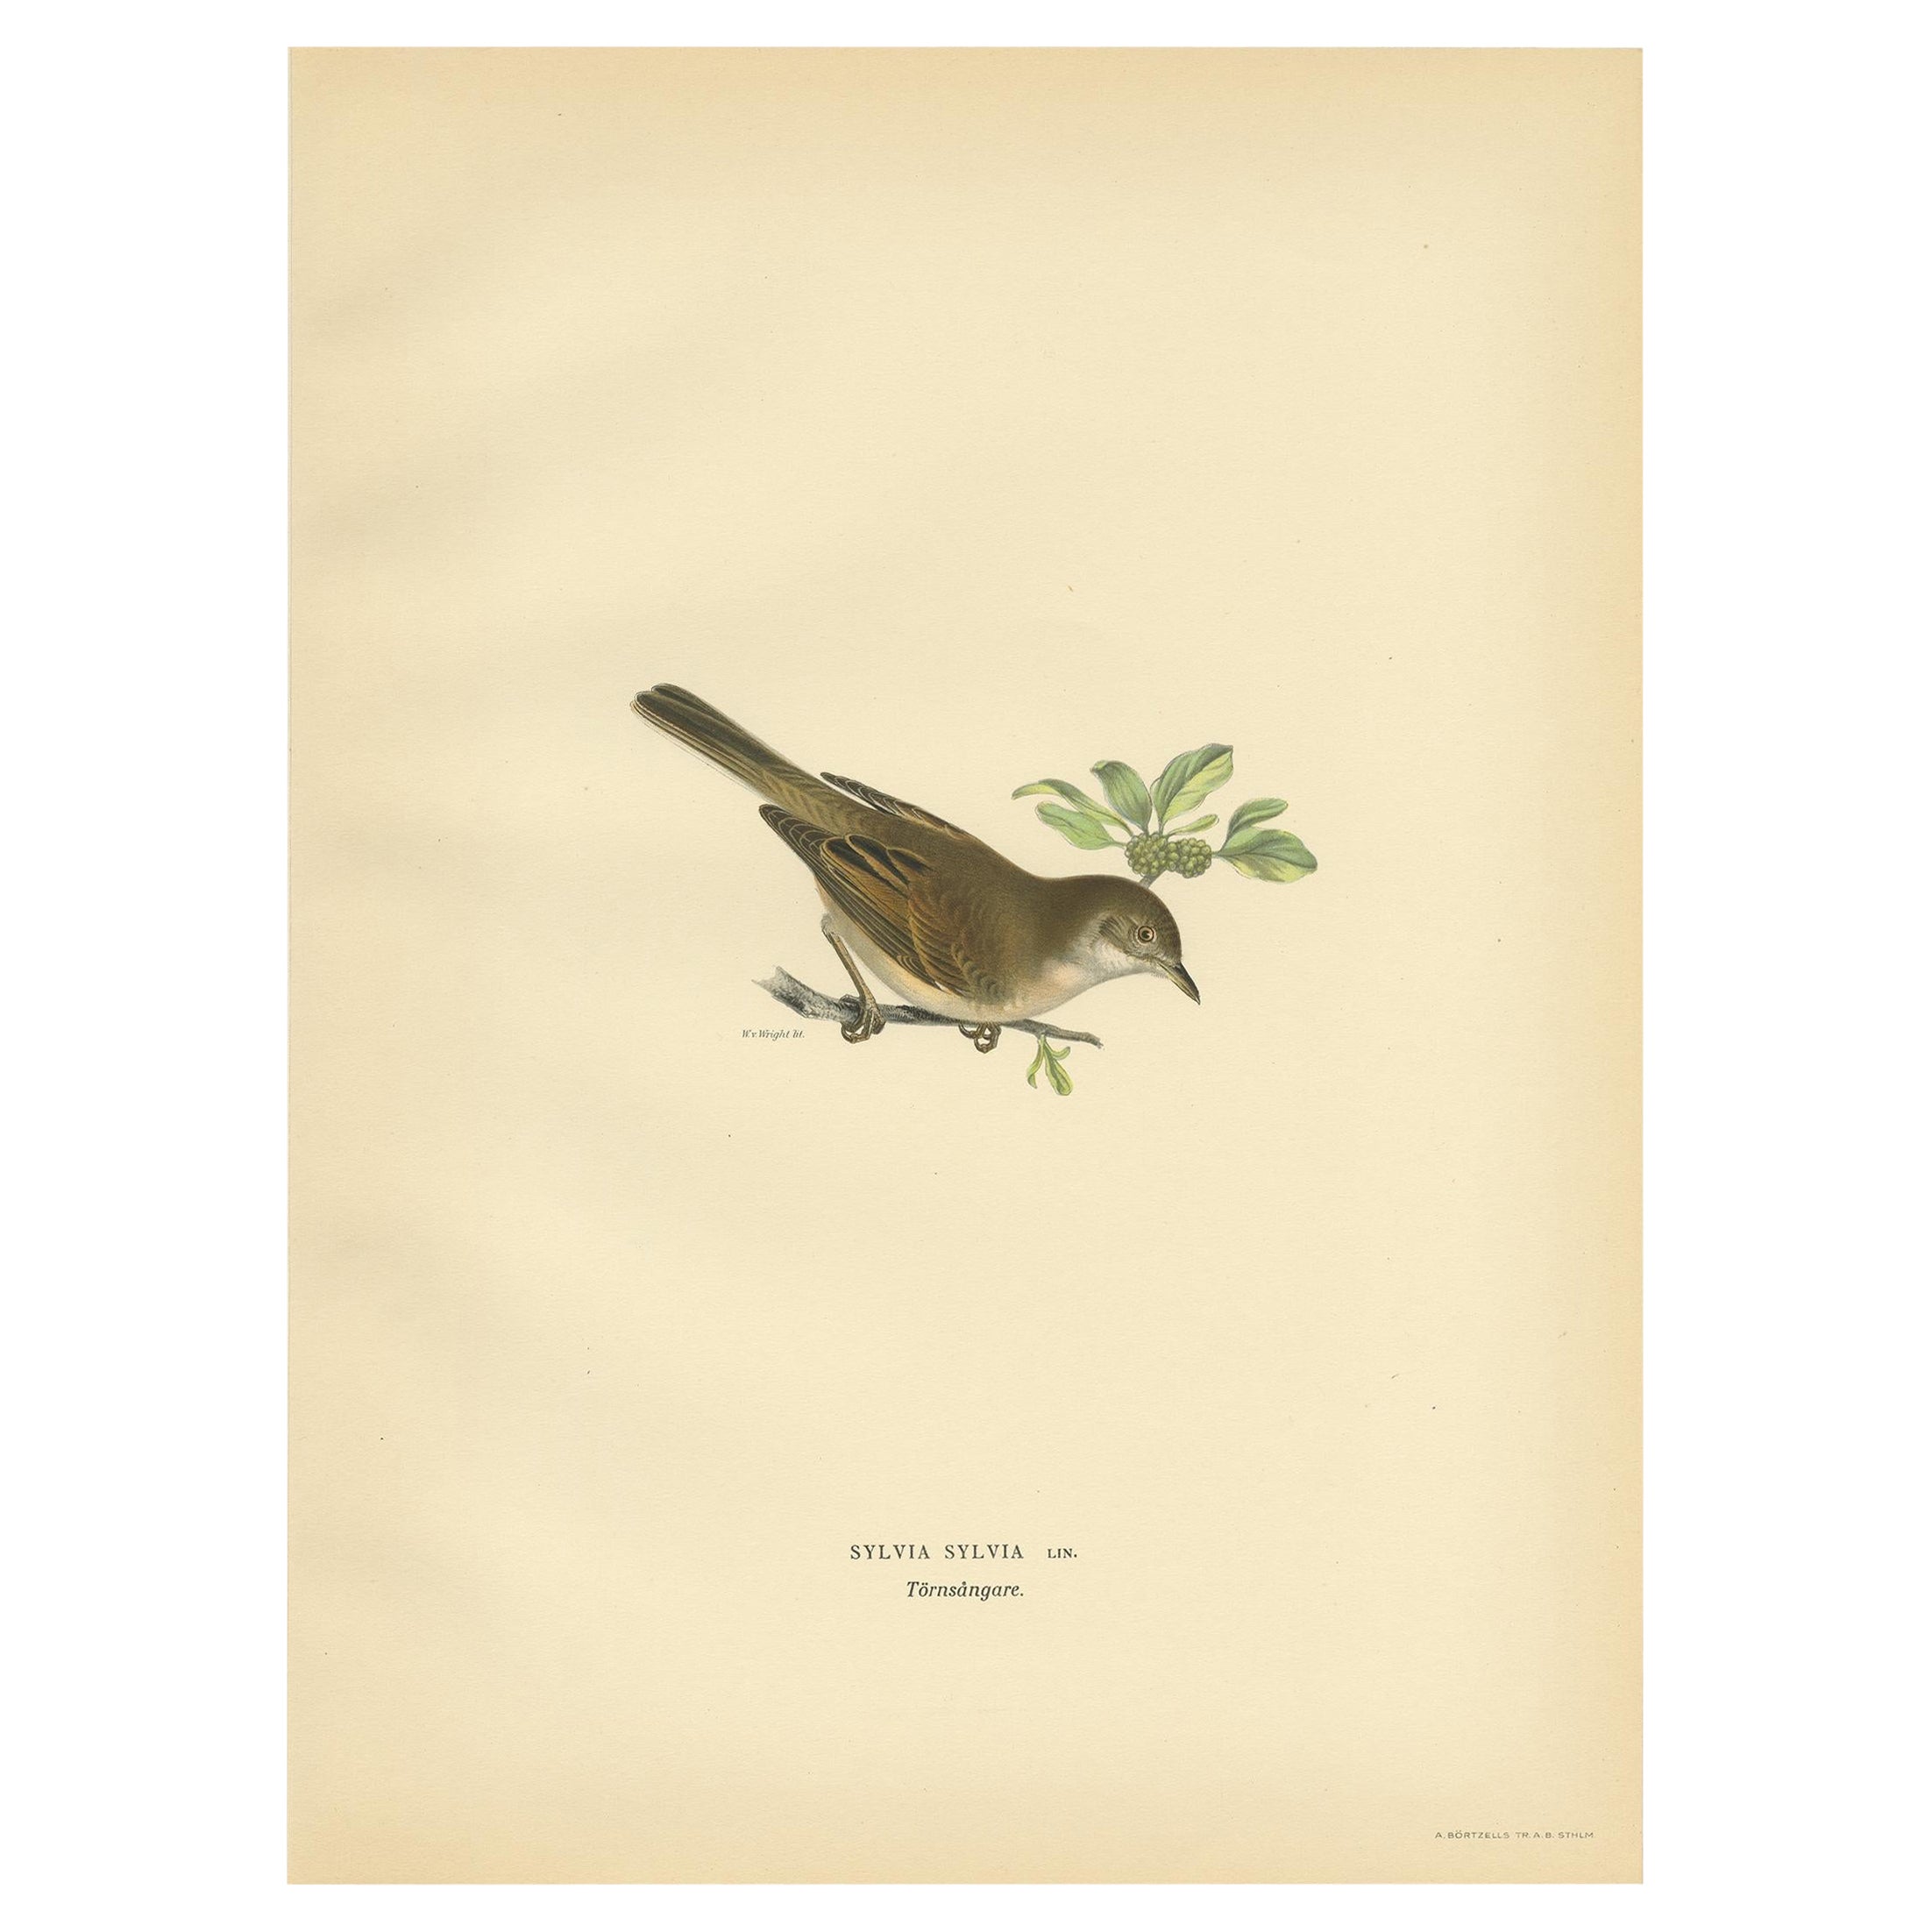 Antique Bird Print of the Typical Warbler by Von Wright, 1927